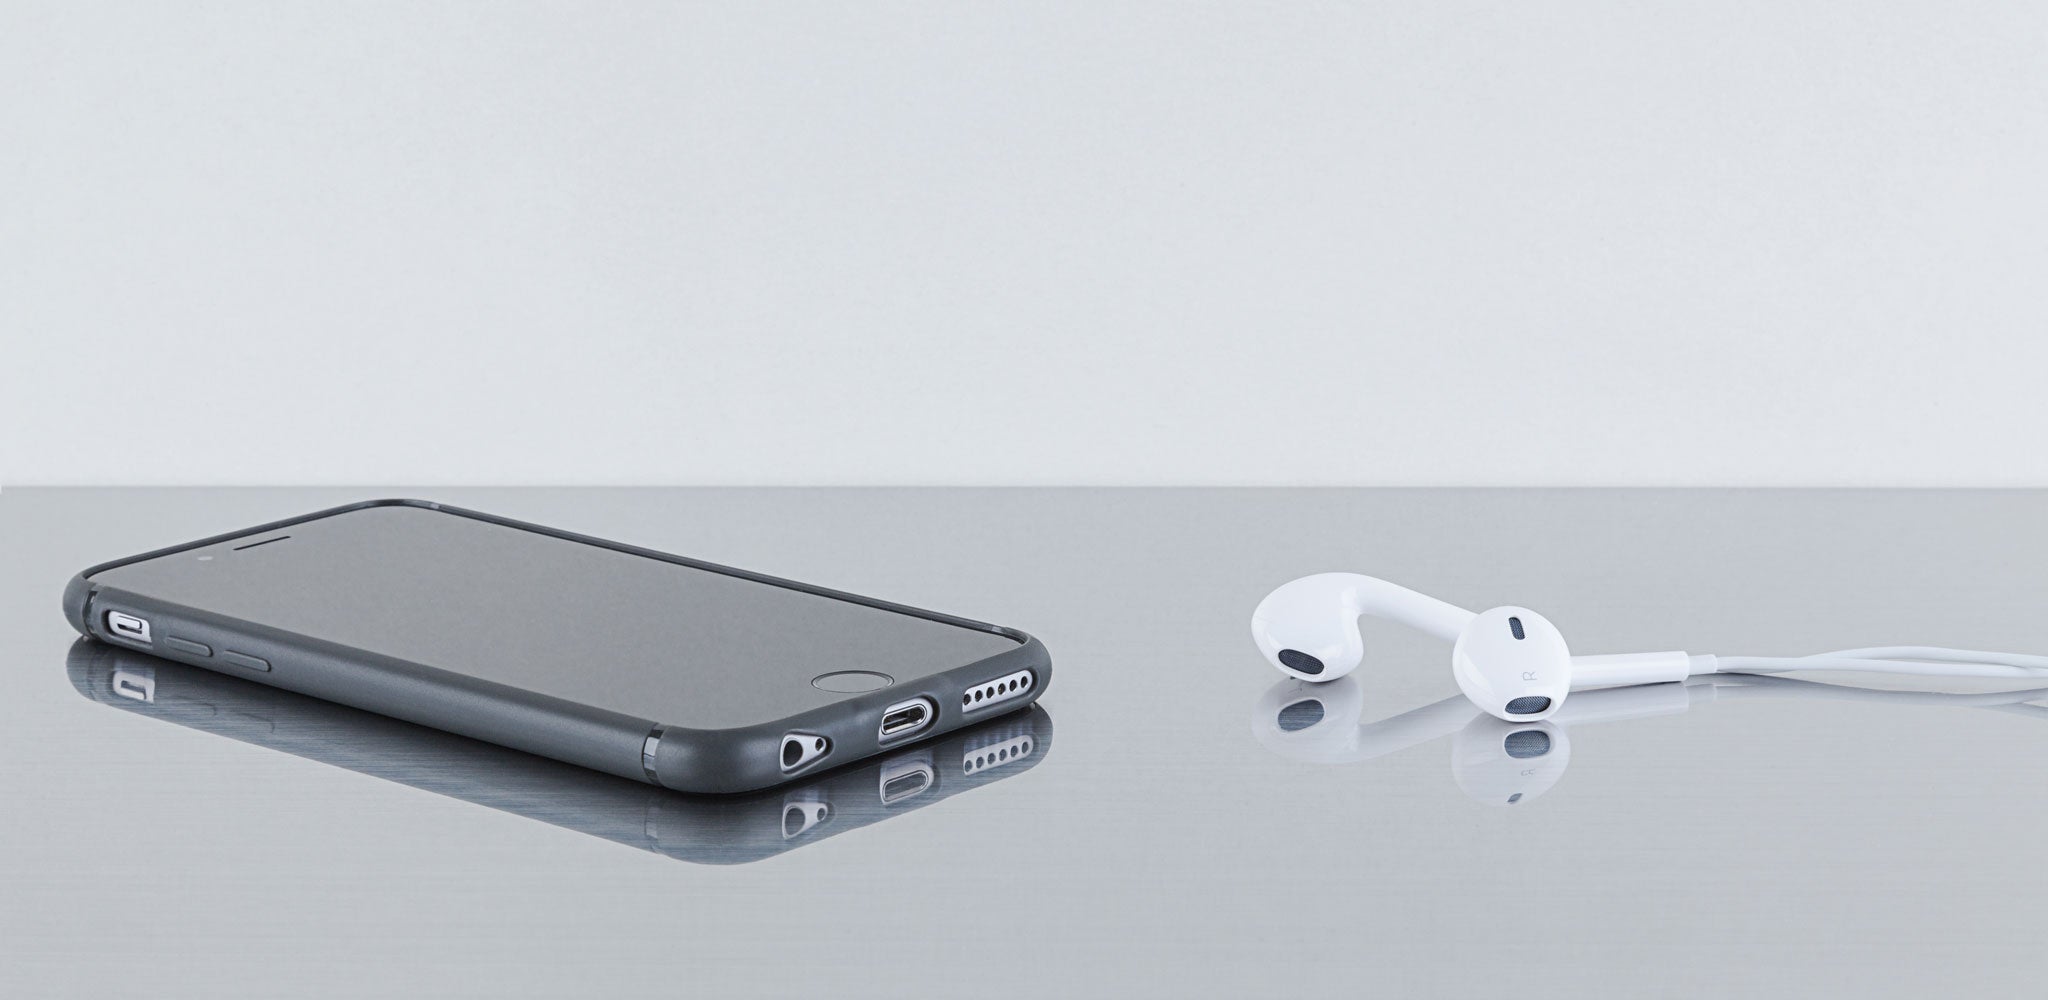 The Sheath | Super slim, shock-absorbing, minimalist iPhone case | earbuds